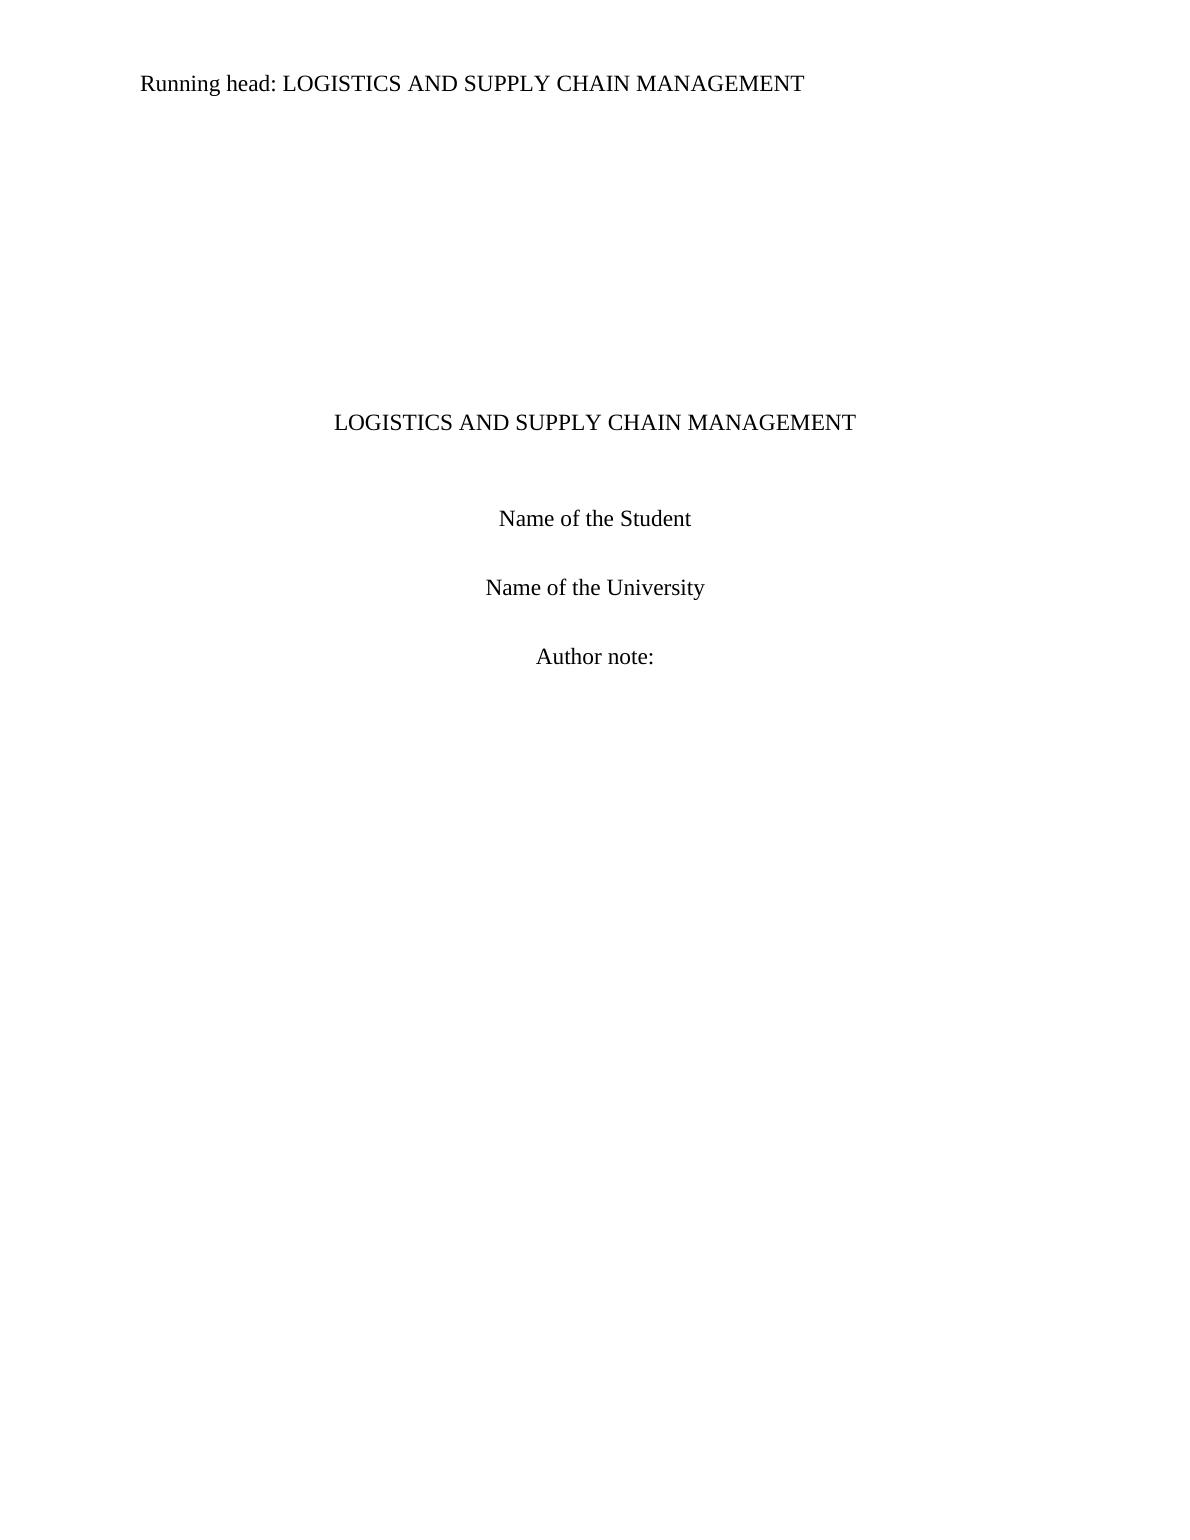 Logistics and Supply Chain Management- PDF_1